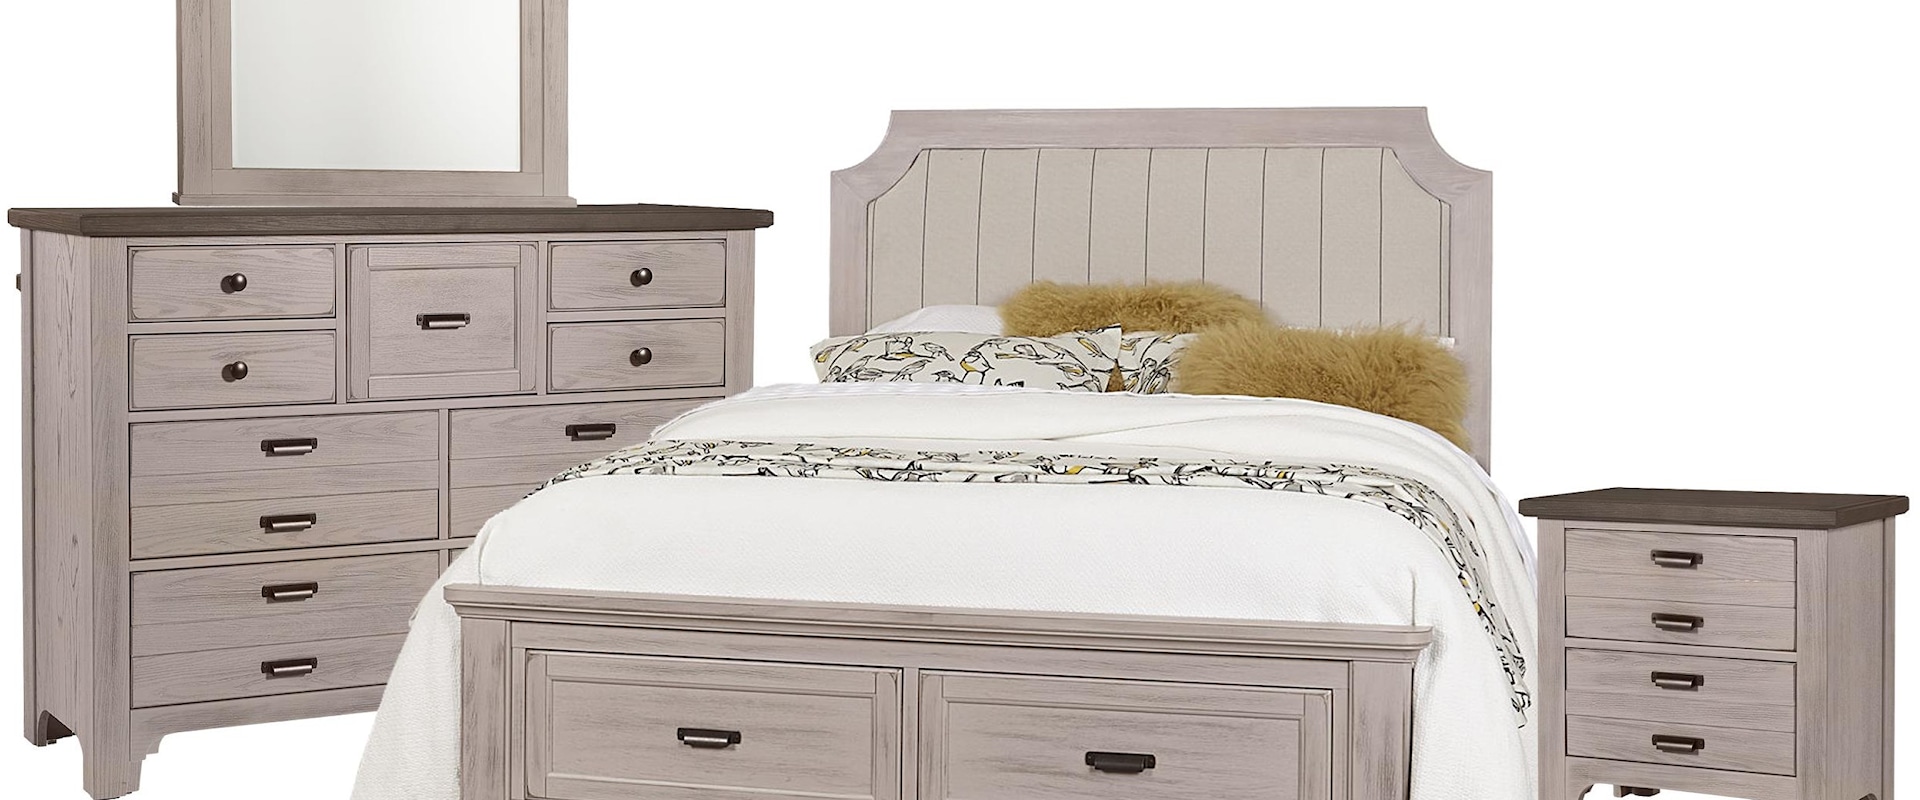 Queen Upholstered Storage Bed, 9 Drawer Dresser, Master Arch Mirror, 2 Drawer Nightstand